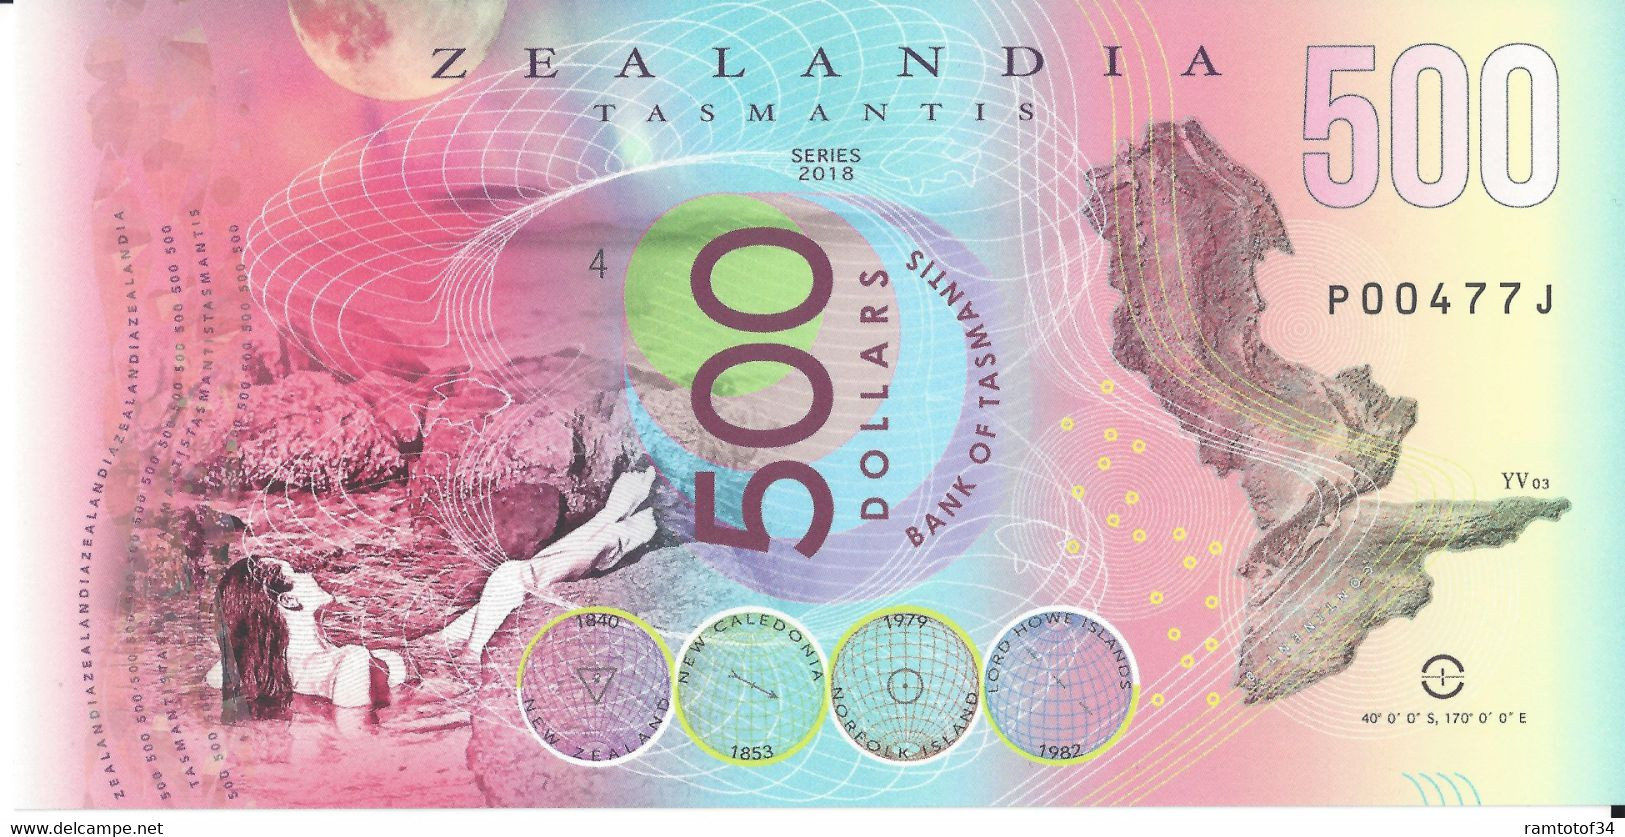 ZEALANDIA - Bank of Tasmantis (set 4 billets) 50-100-200-500 Dollars - 2018 Polymer UNC